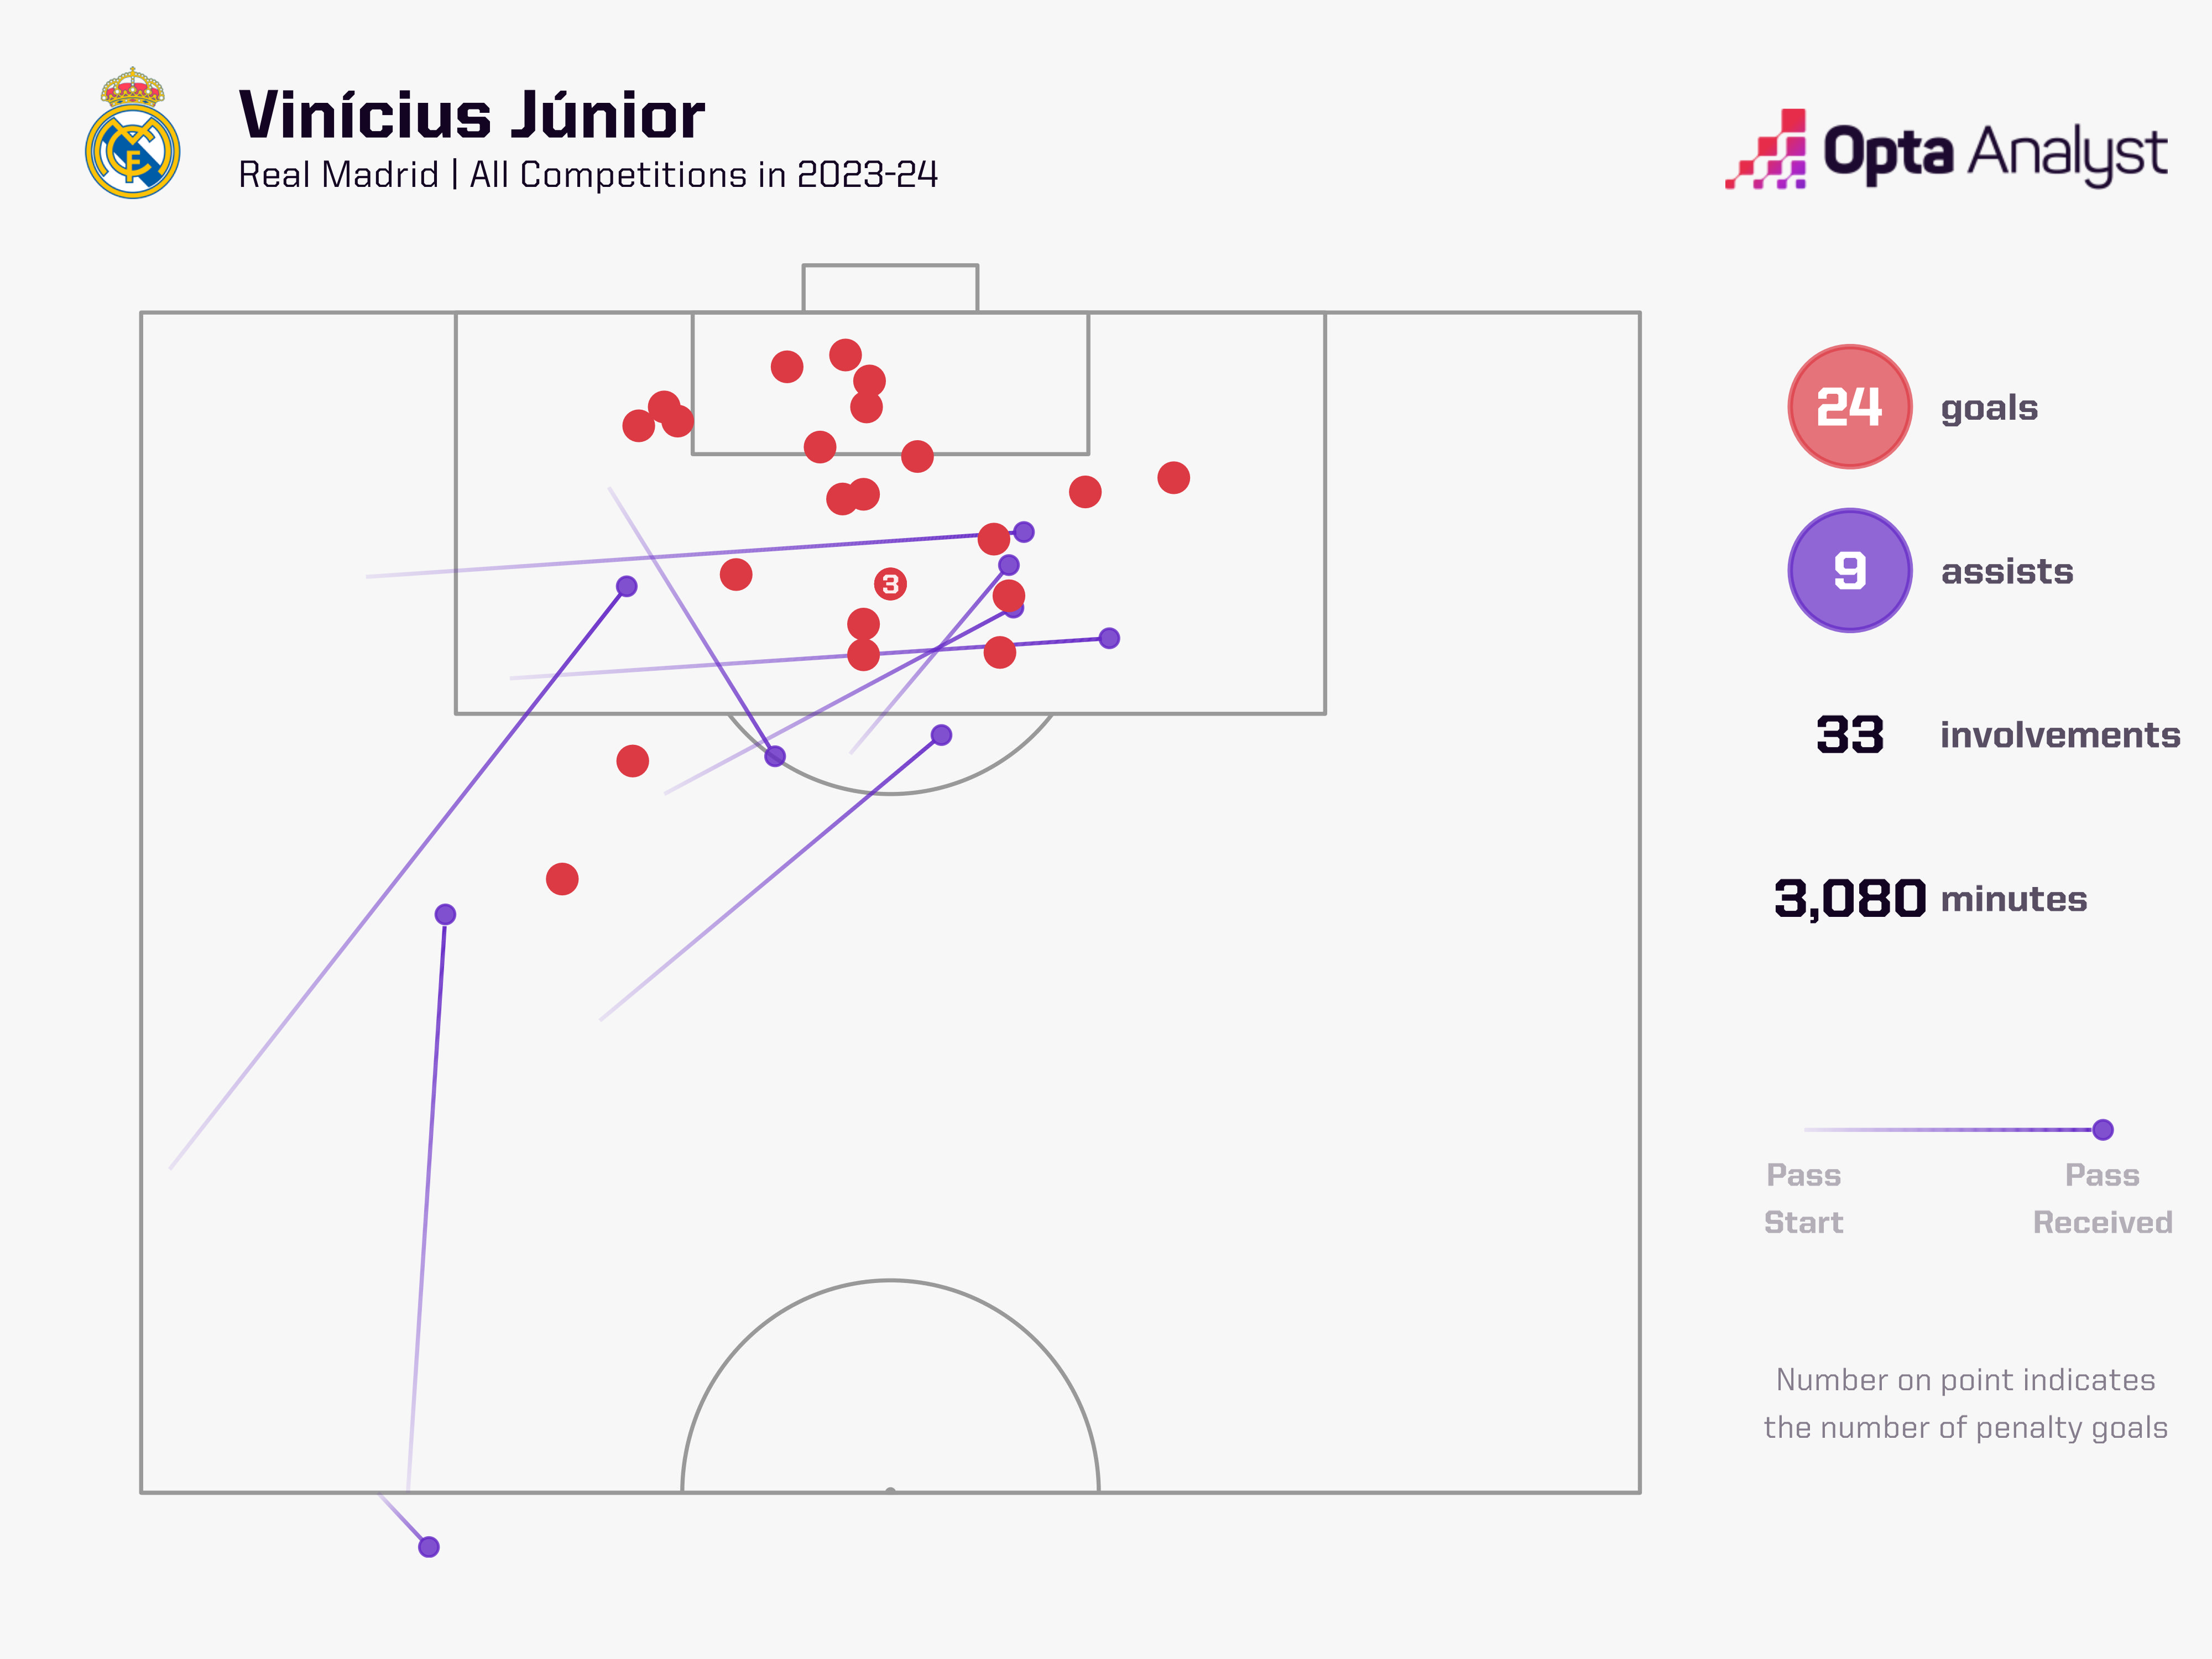 Vinícius Júnior Goal Involvements